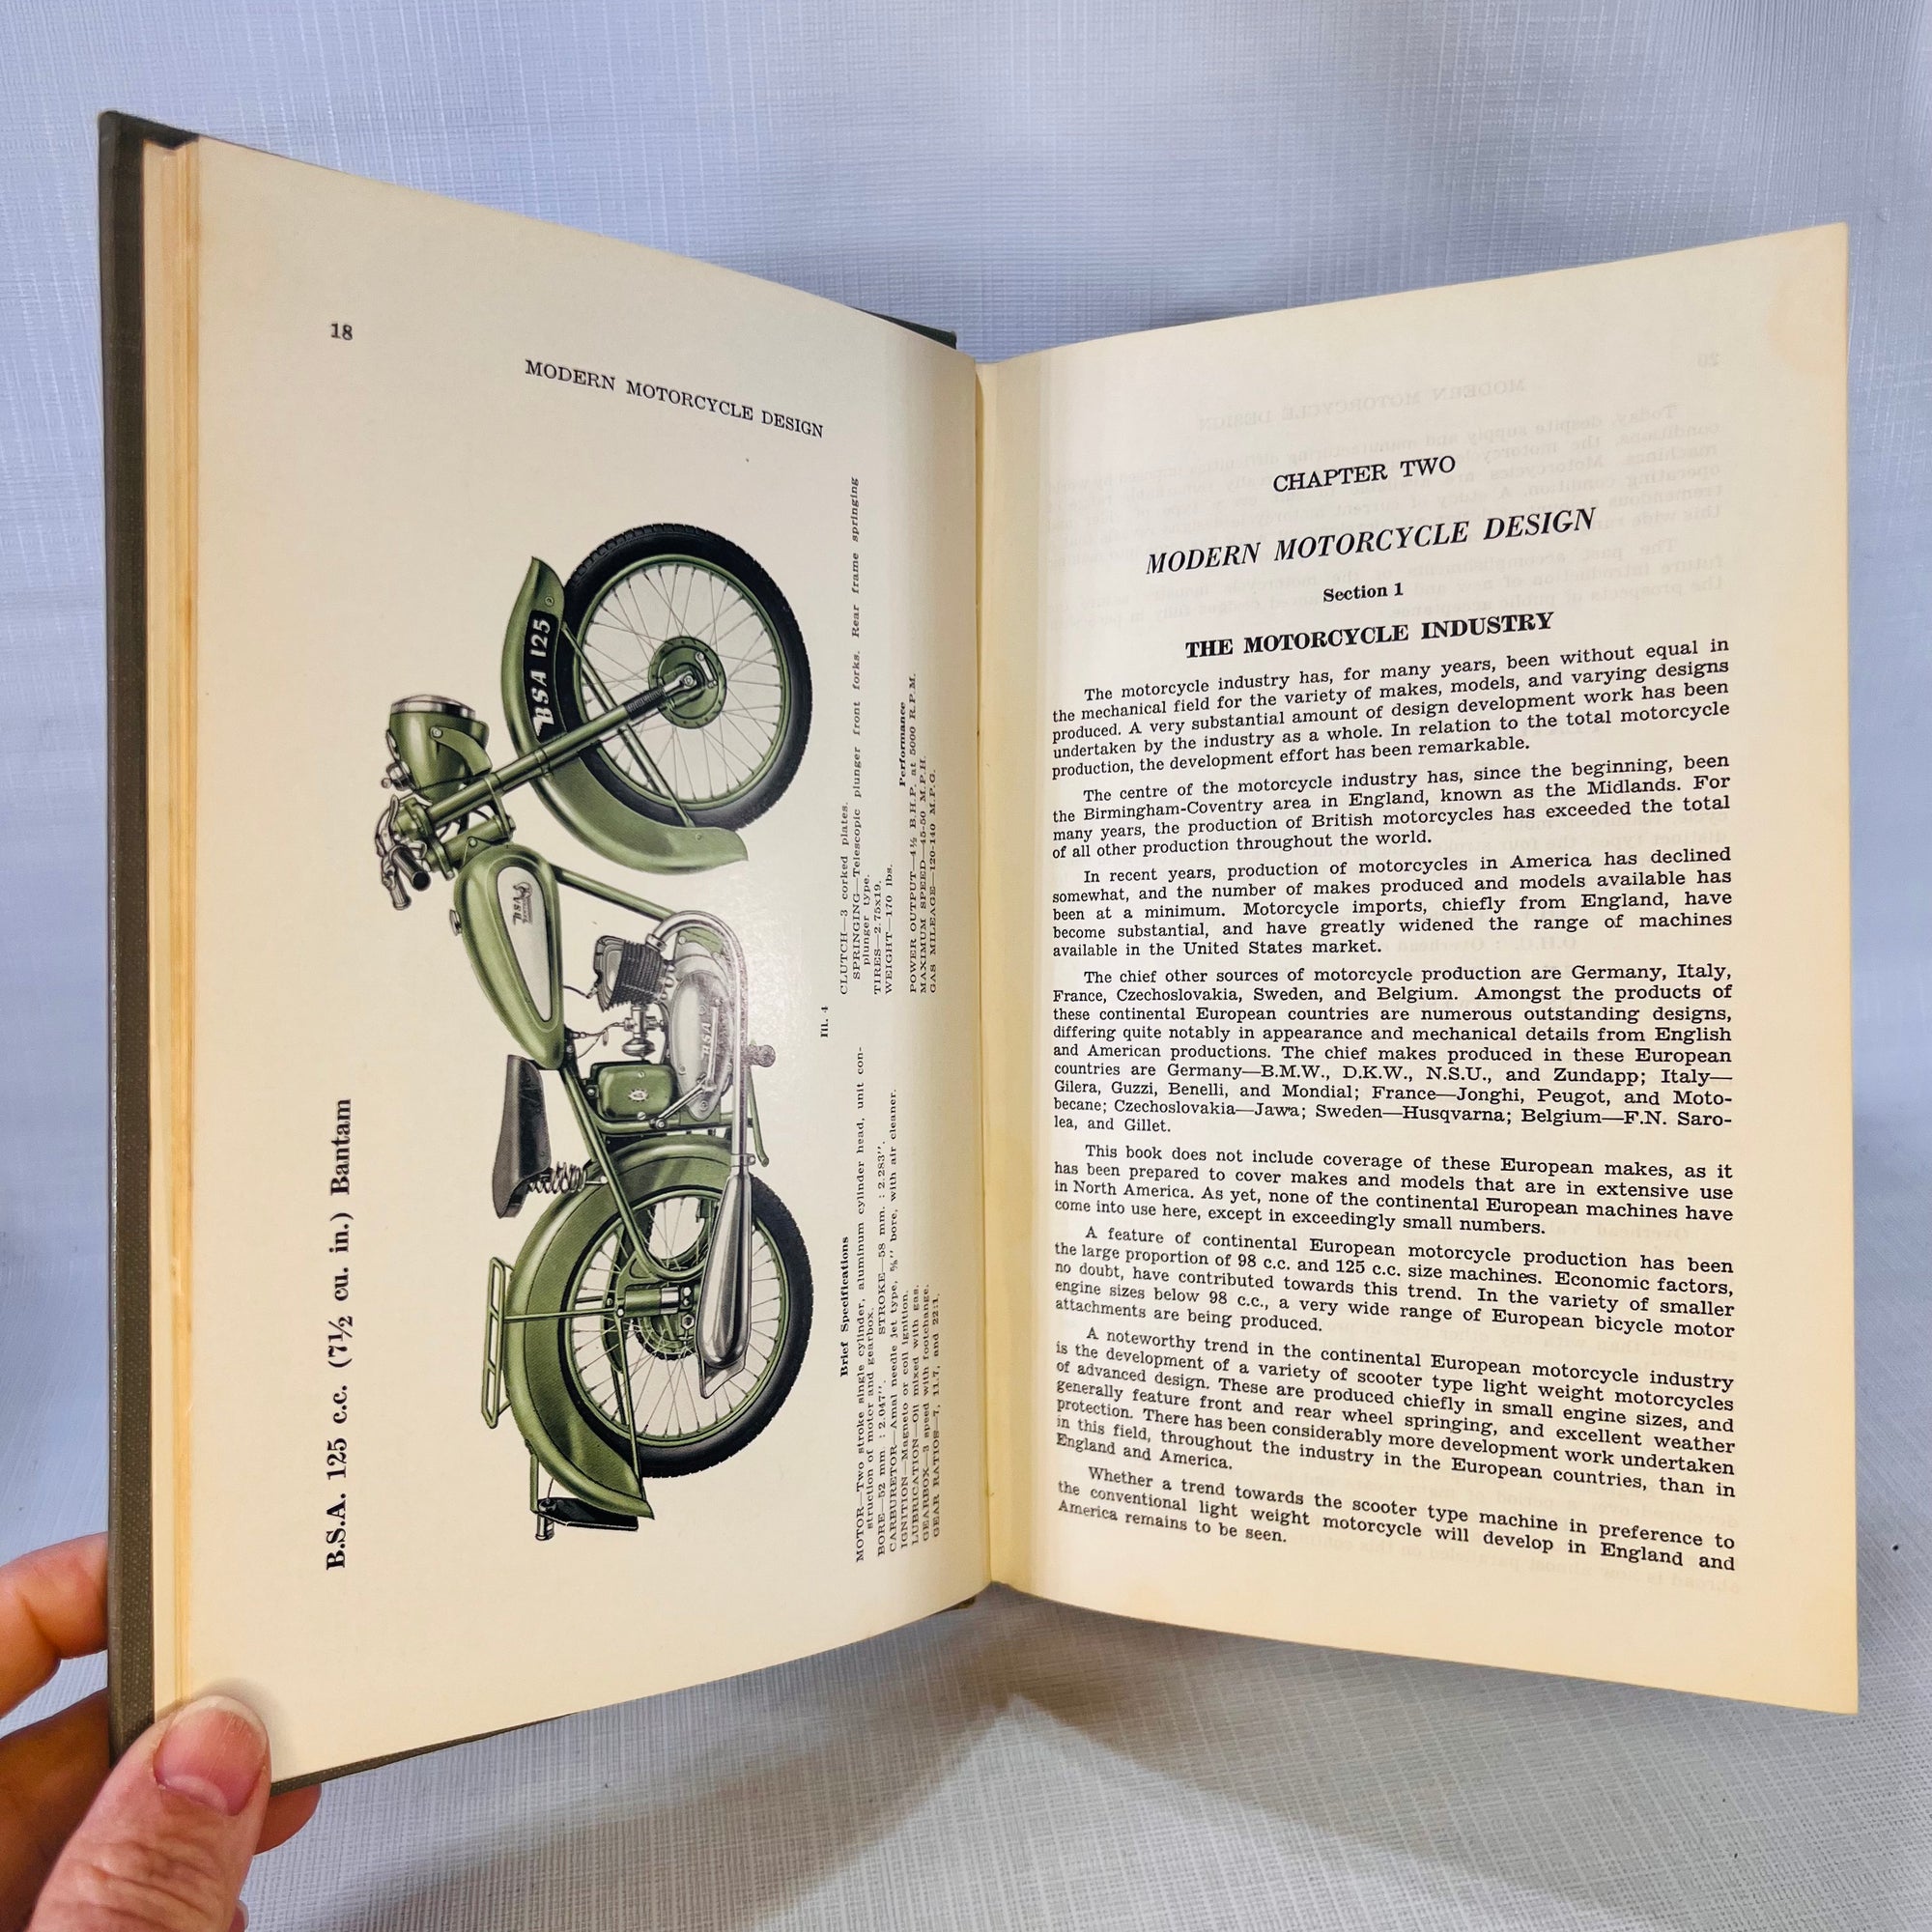 Modern Motorcycle Mechanics by J.B. Nicholson Fourth Edition 1953 Nicholson Brothers